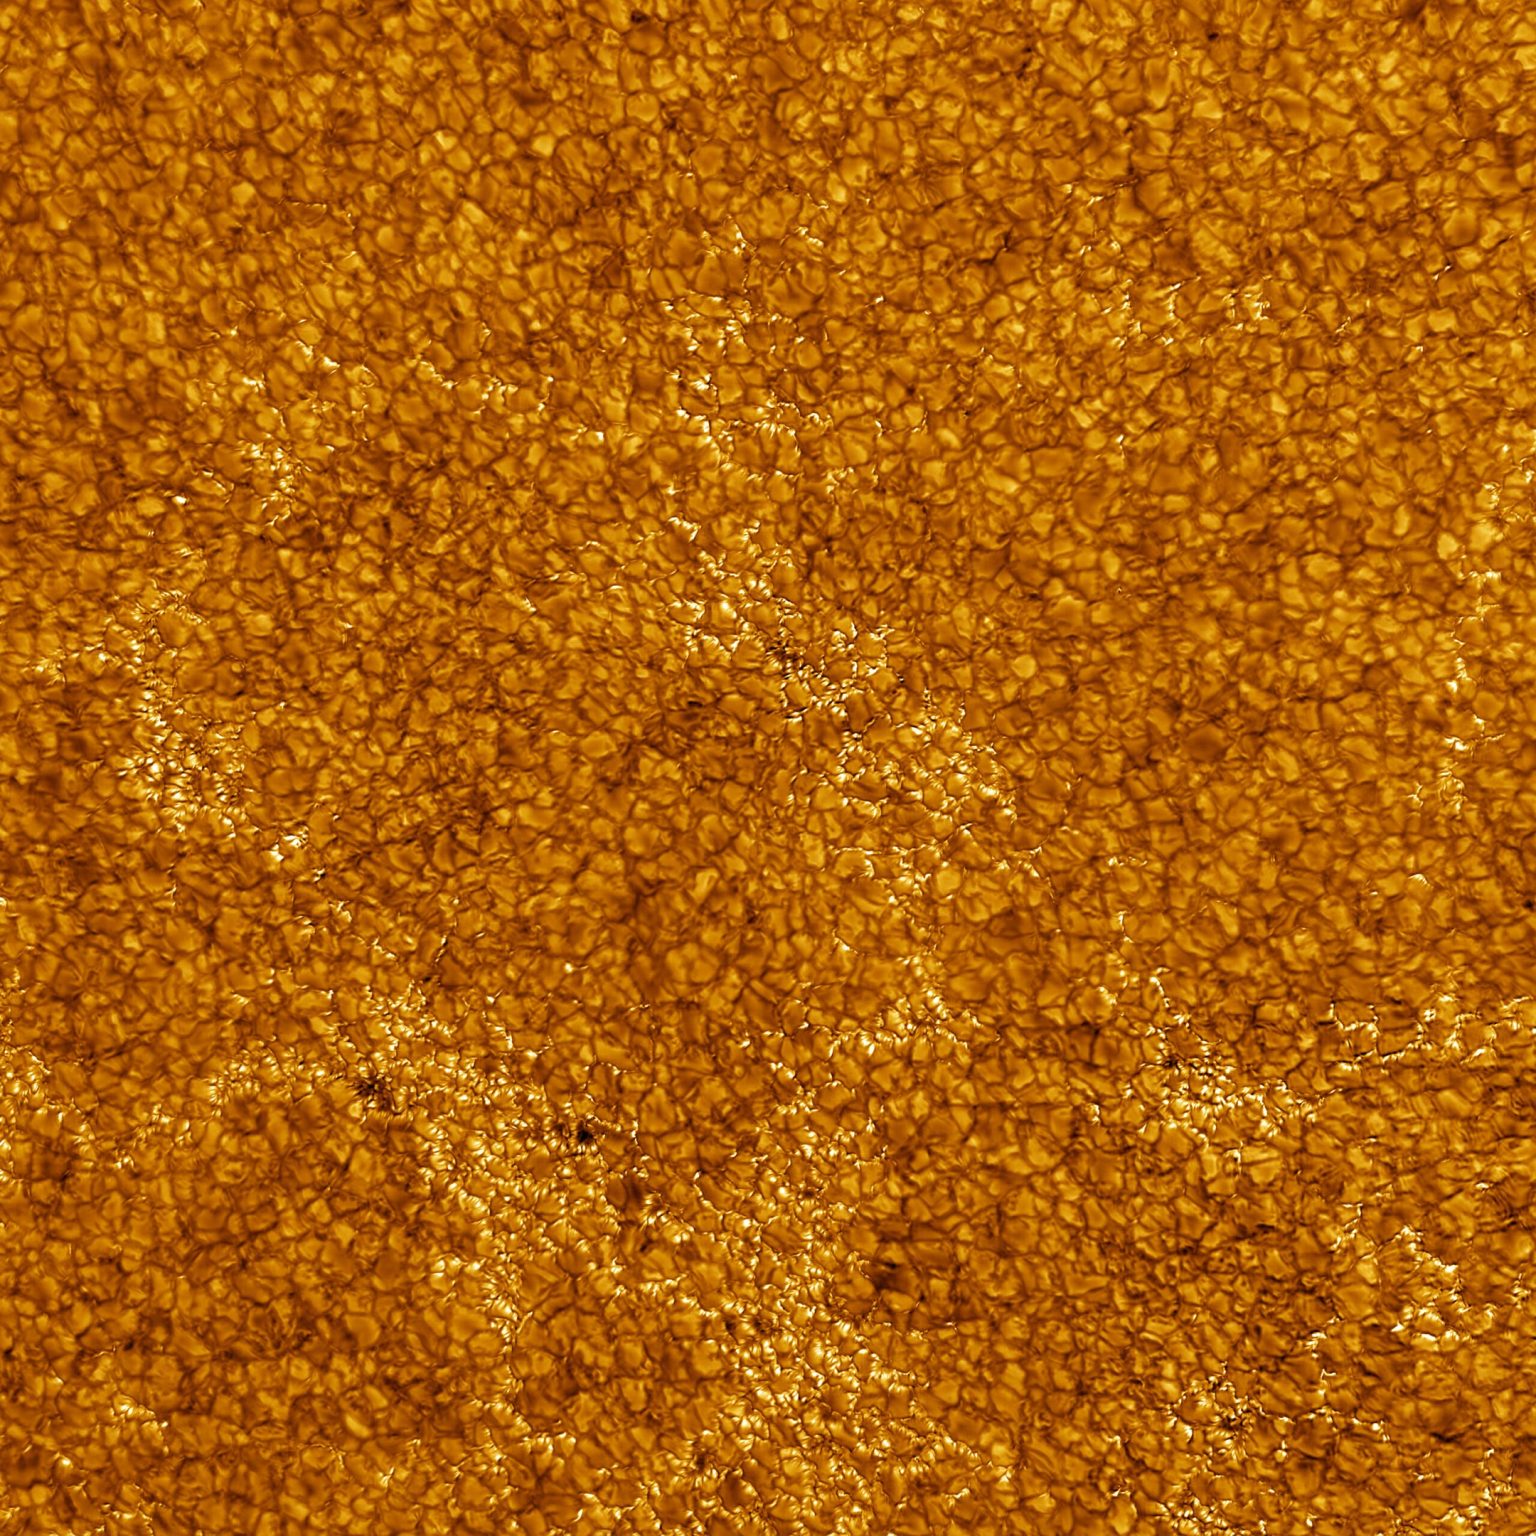 Suns-Chromosphere-Inouye-Solar-Telescope-1536x1536.jpg